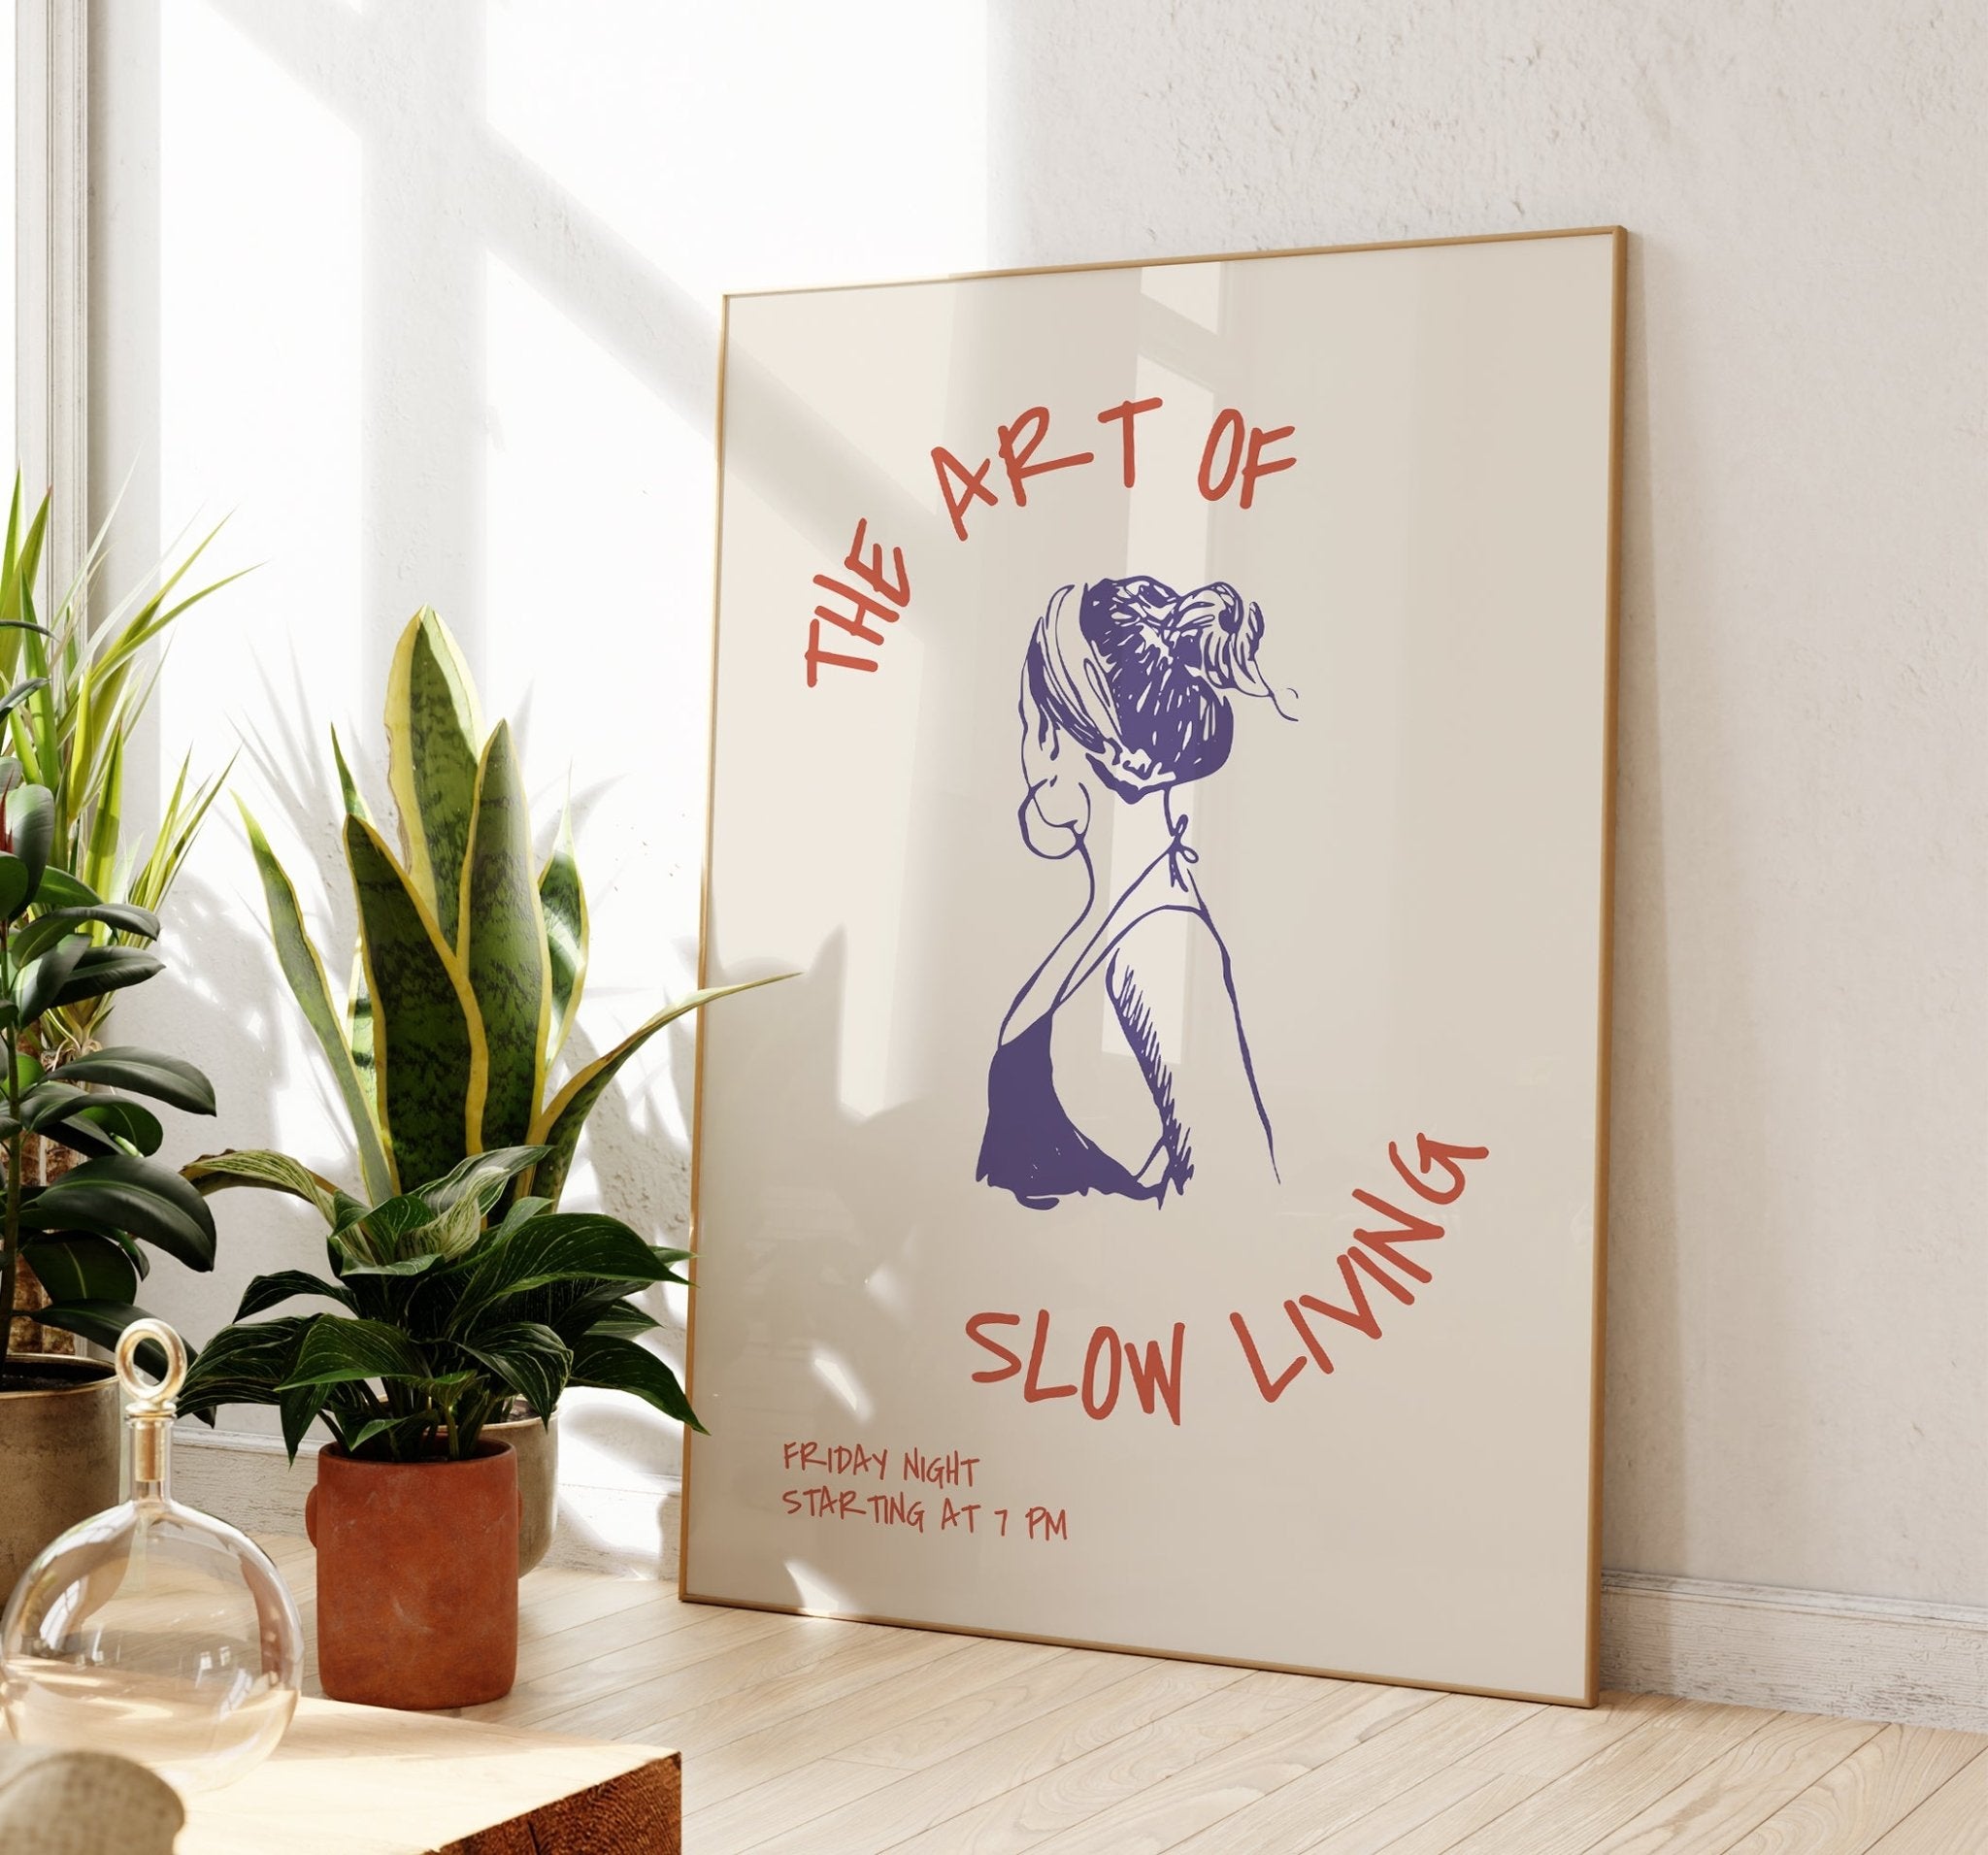 The Art of Slow Living Print